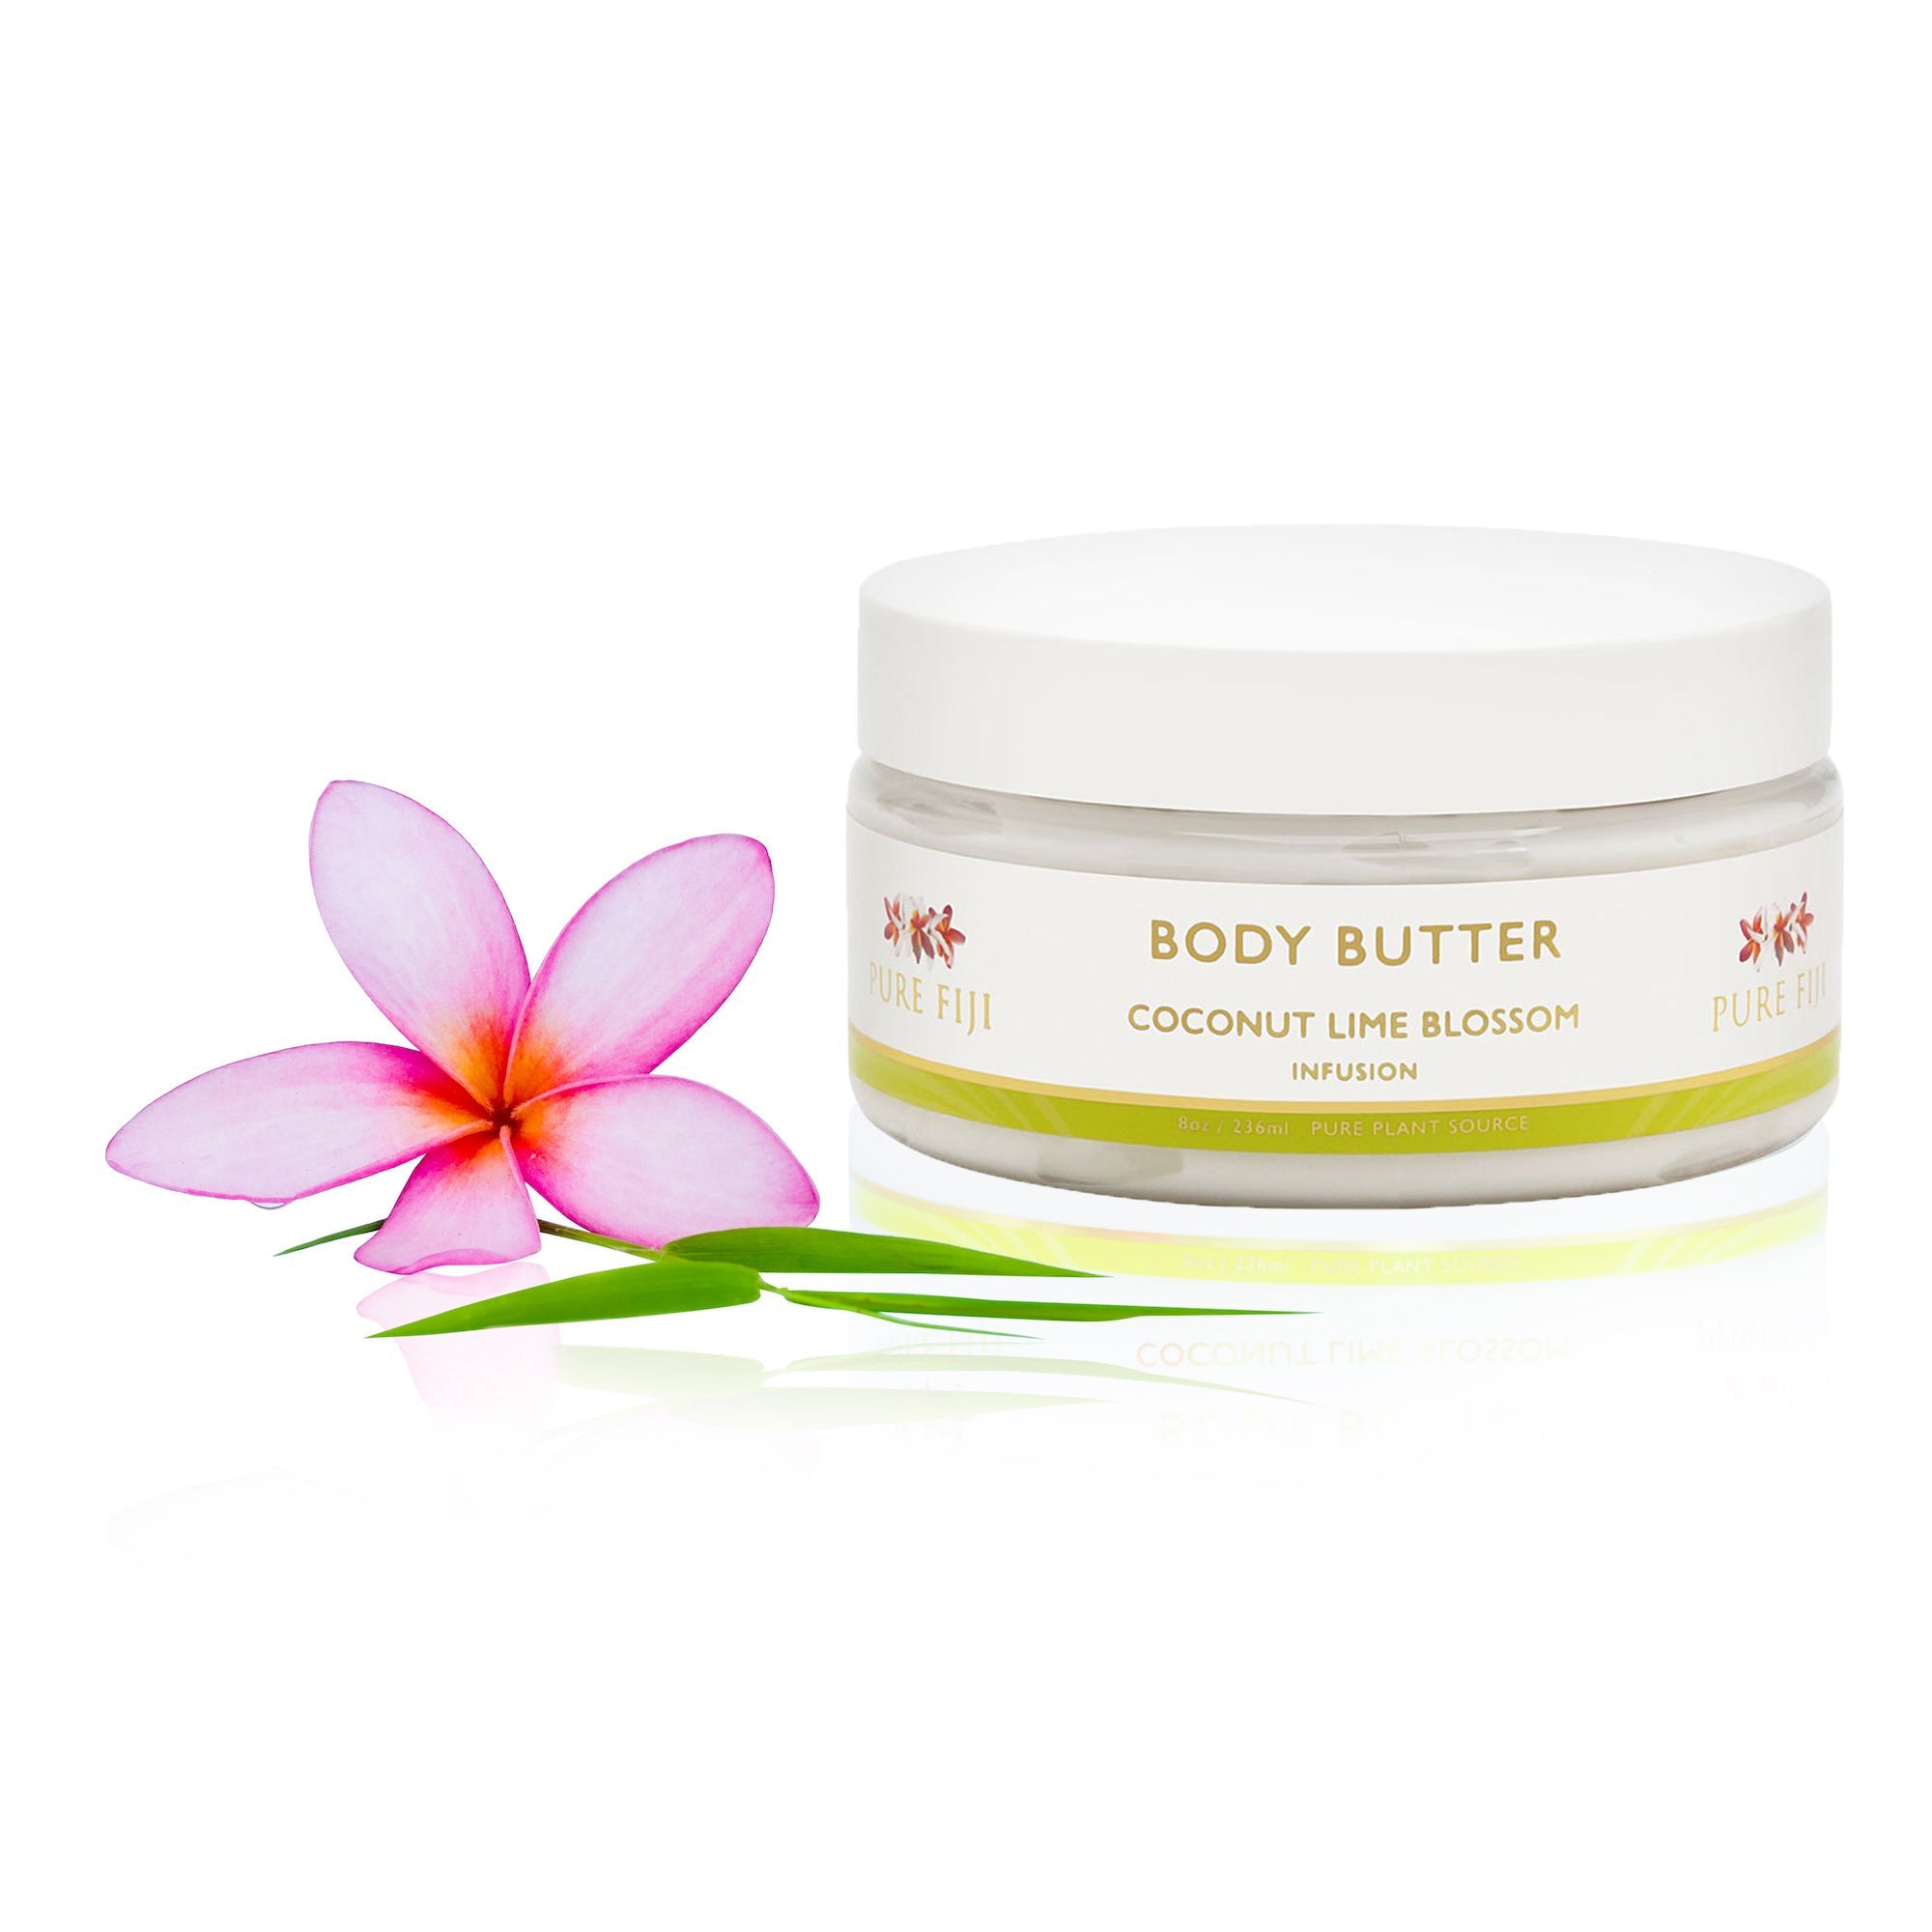 Pure Fiji Body Butter - Coconut Lime Blossom